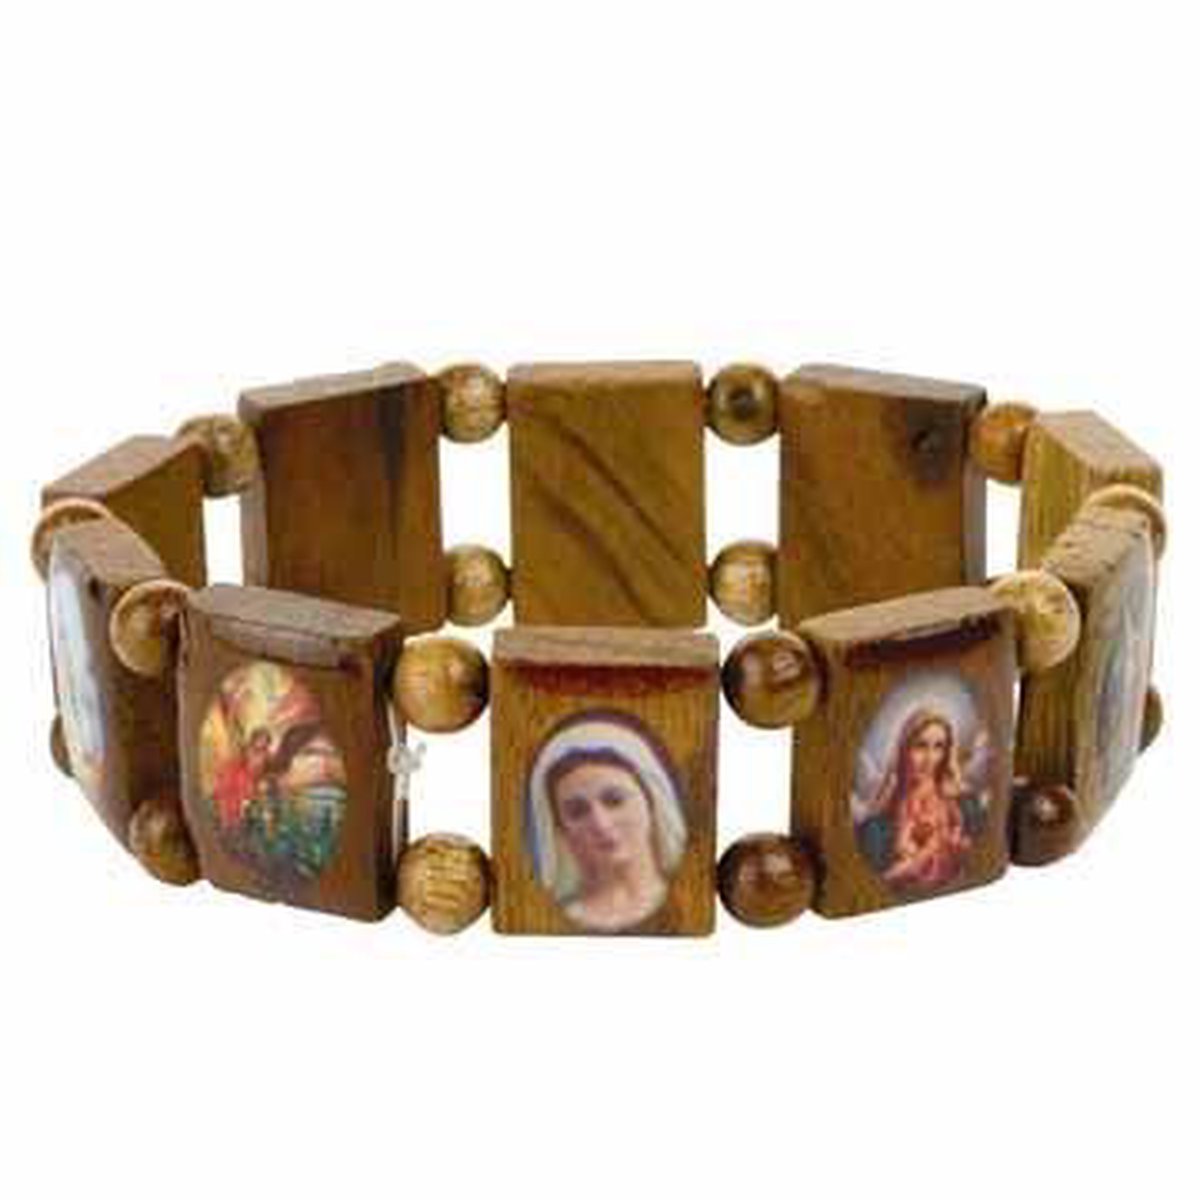 Escapulario armband hout met medaillons van heiligen | bol.com